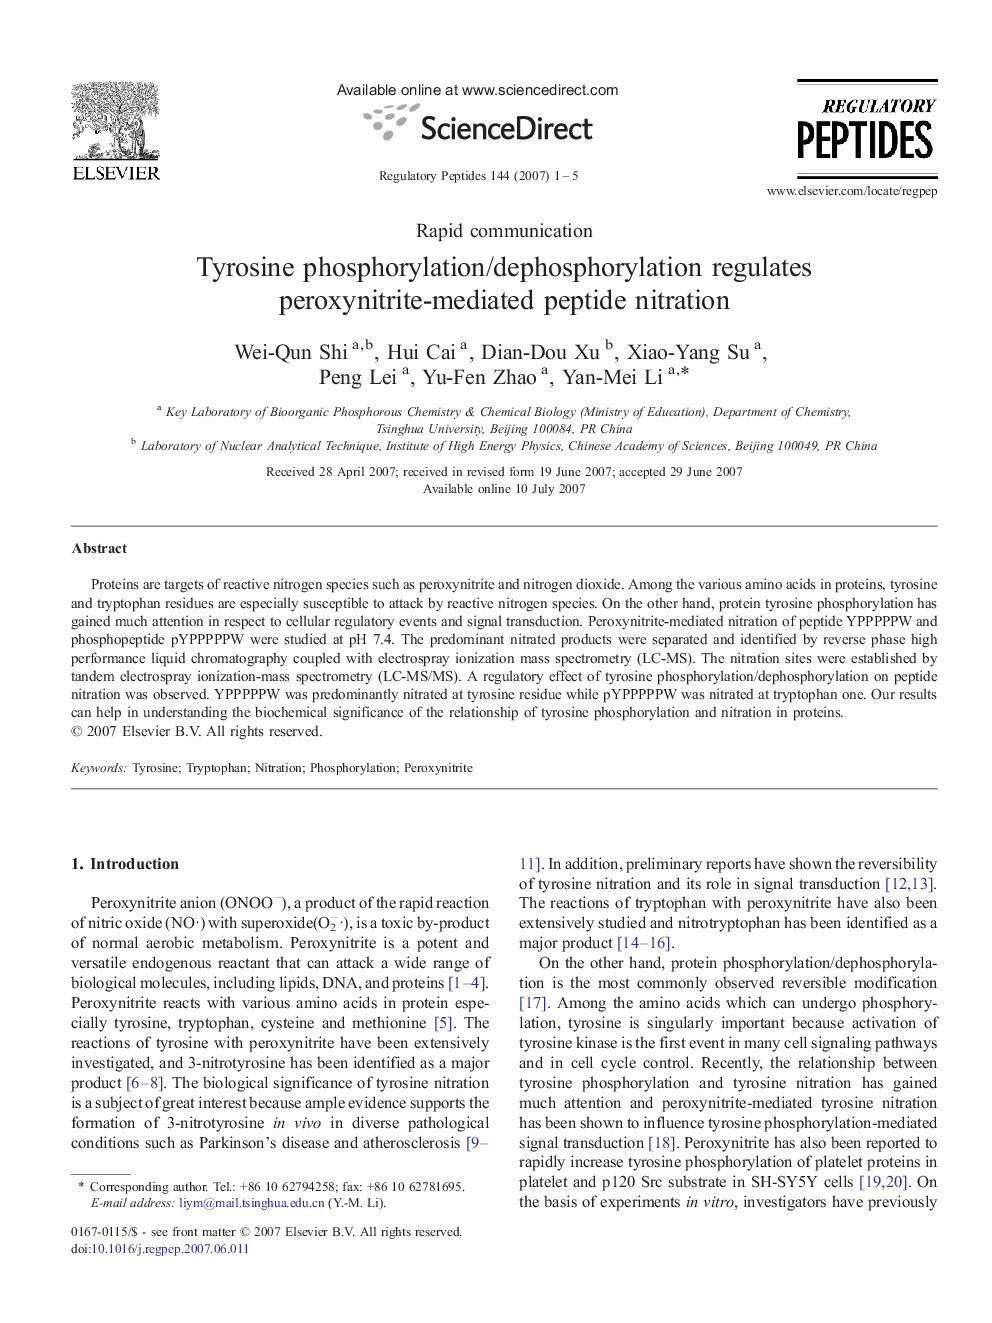 Tyrosine phosphorylation/dephosphorylation regulates peroxynitrite-mediated peptide nitration